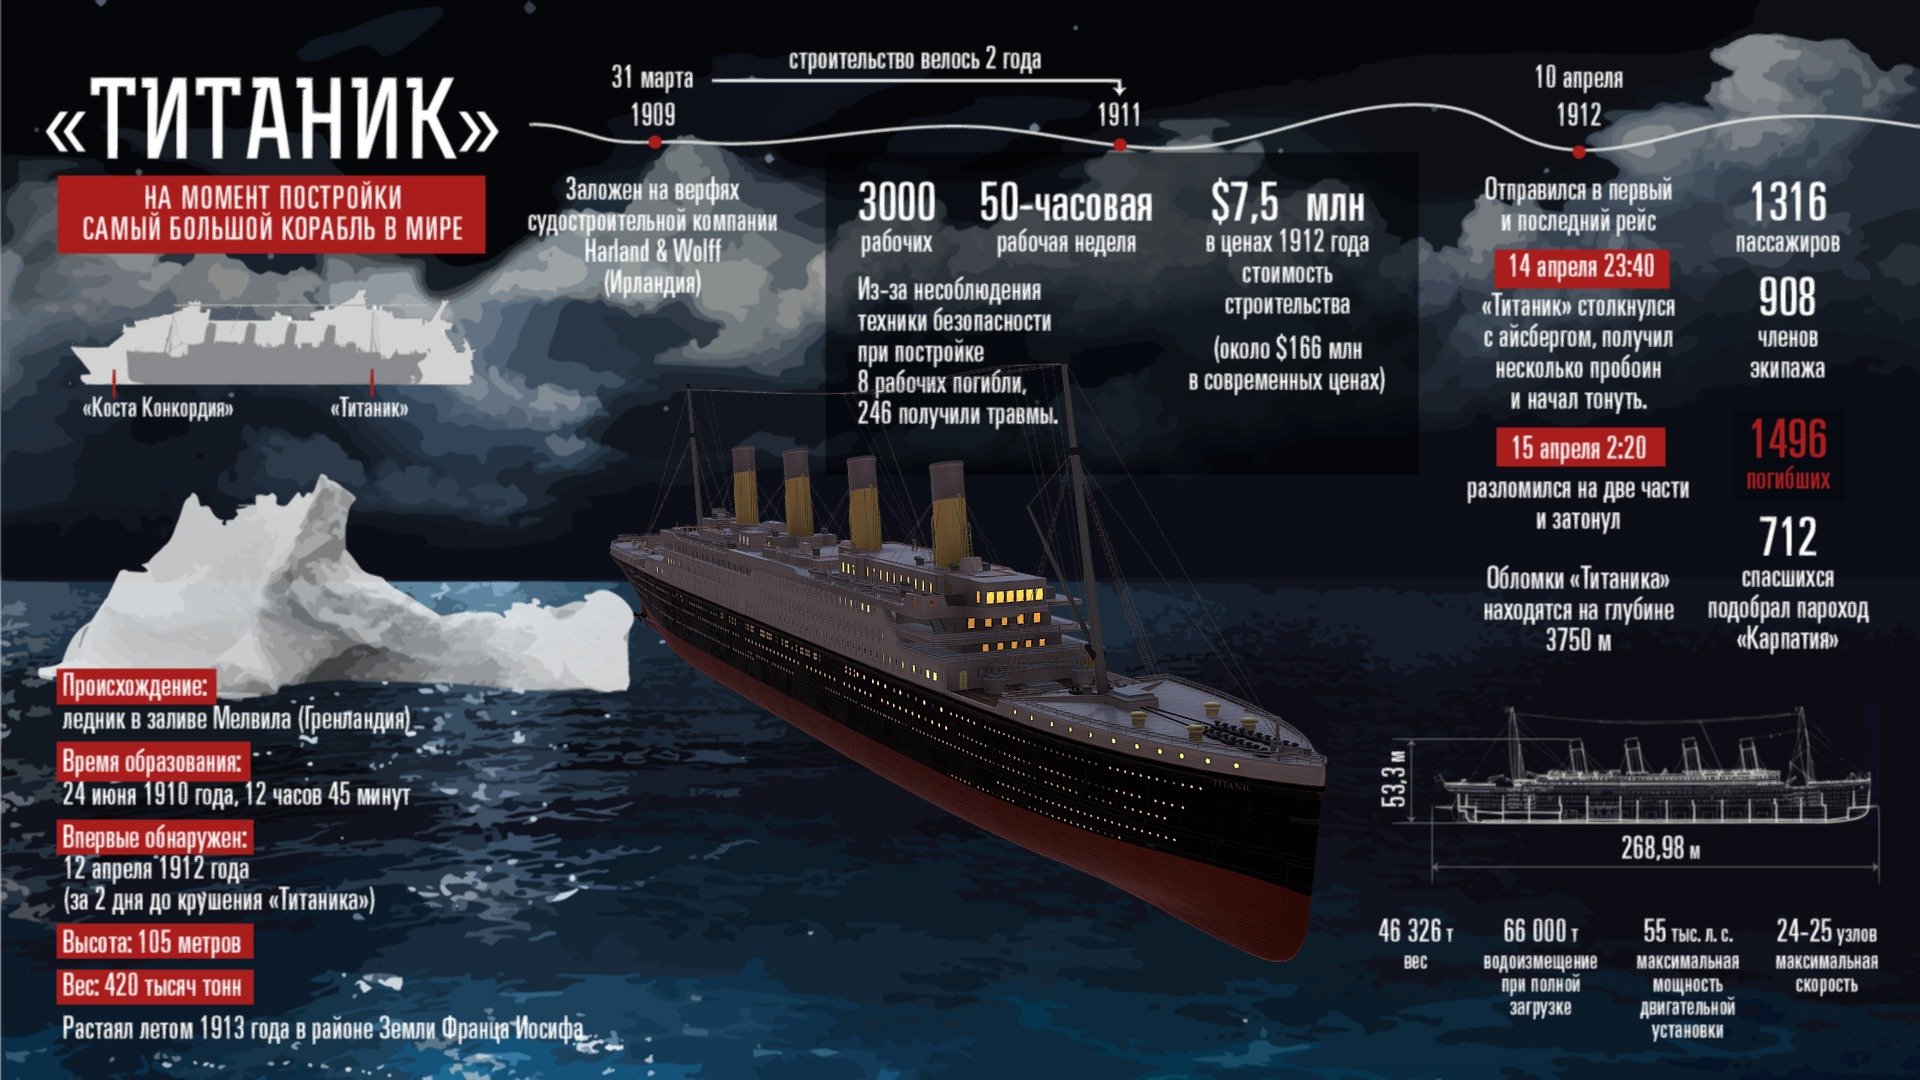 Какая мощность корабля. Титаник 10 апреля 1912. Размер Титаника 1912. Параметры судна Титаник. Титаник характеристики корабля технические.